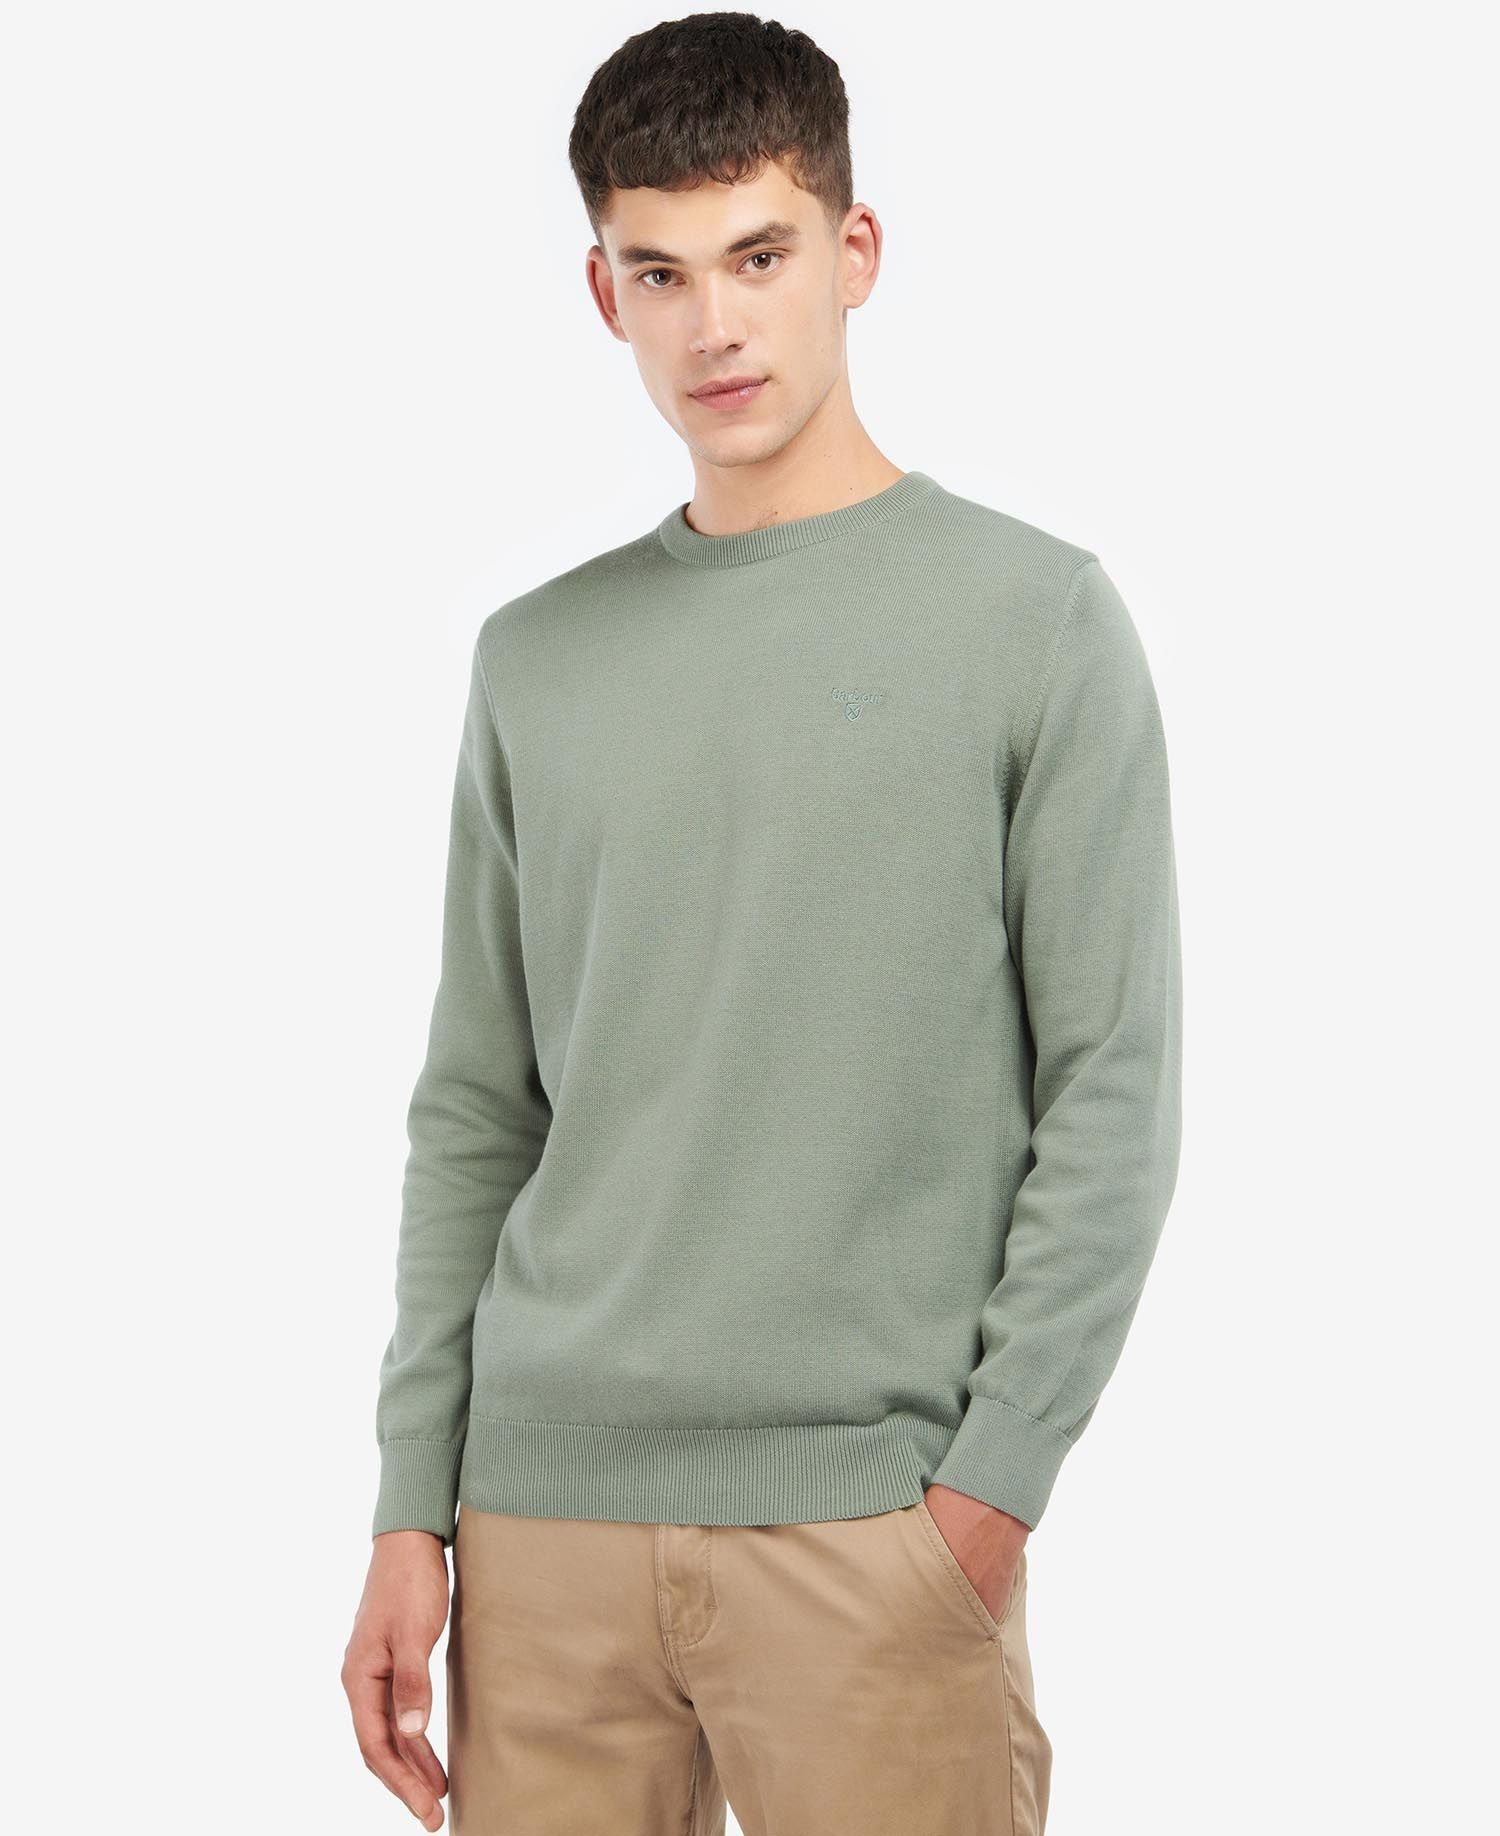 Men's Pima Cotton Crew Neck Sweater - Agave Green